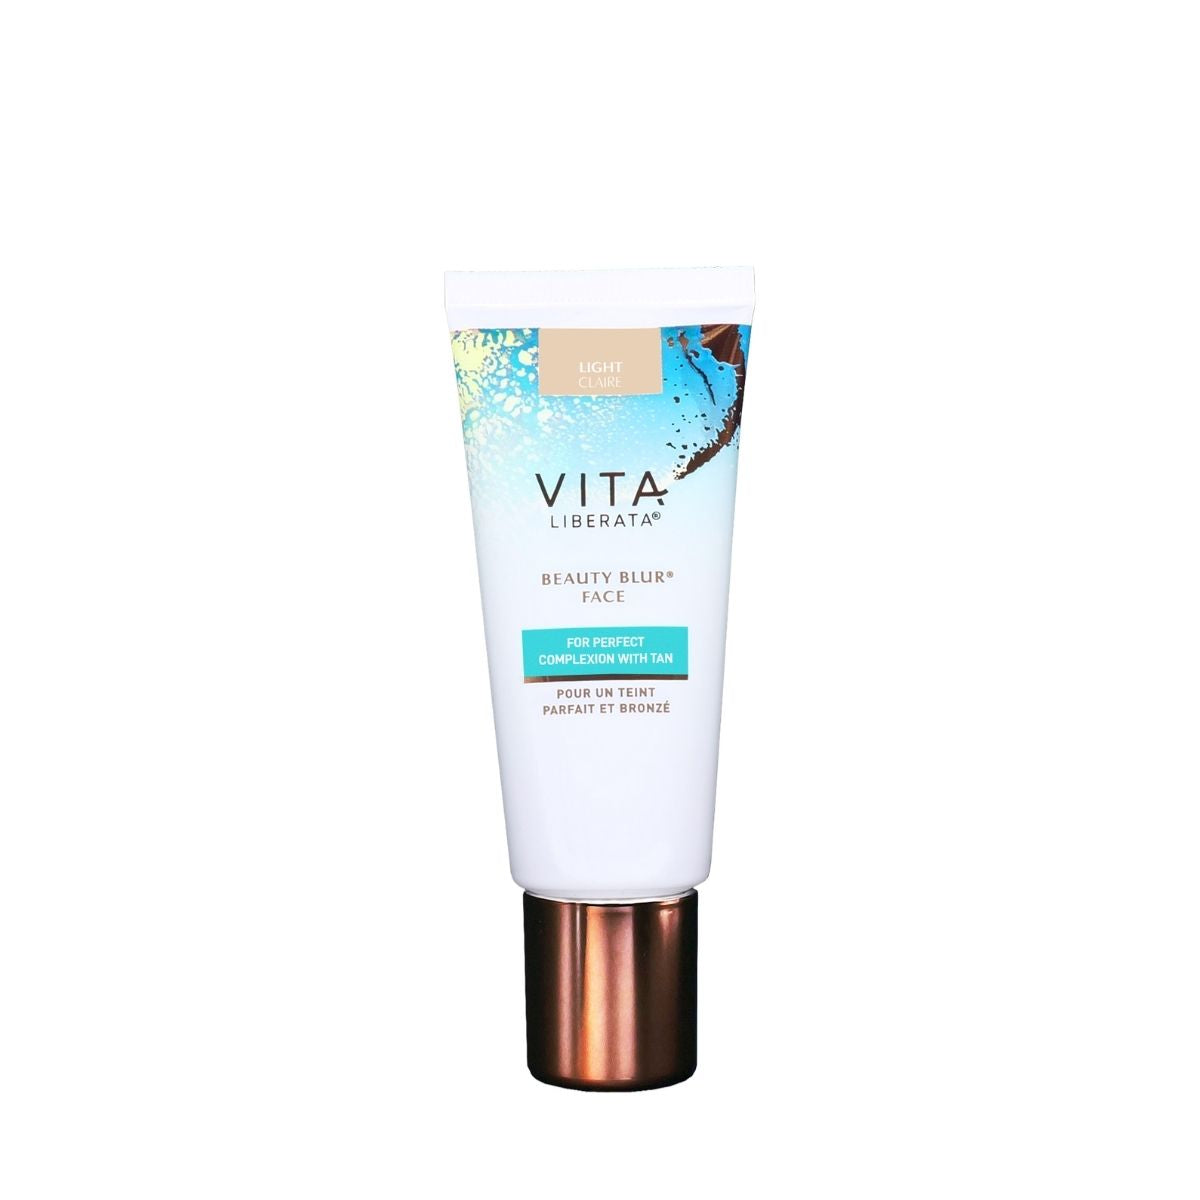 Vita Liberata Beauty Blur Face with Tan Light